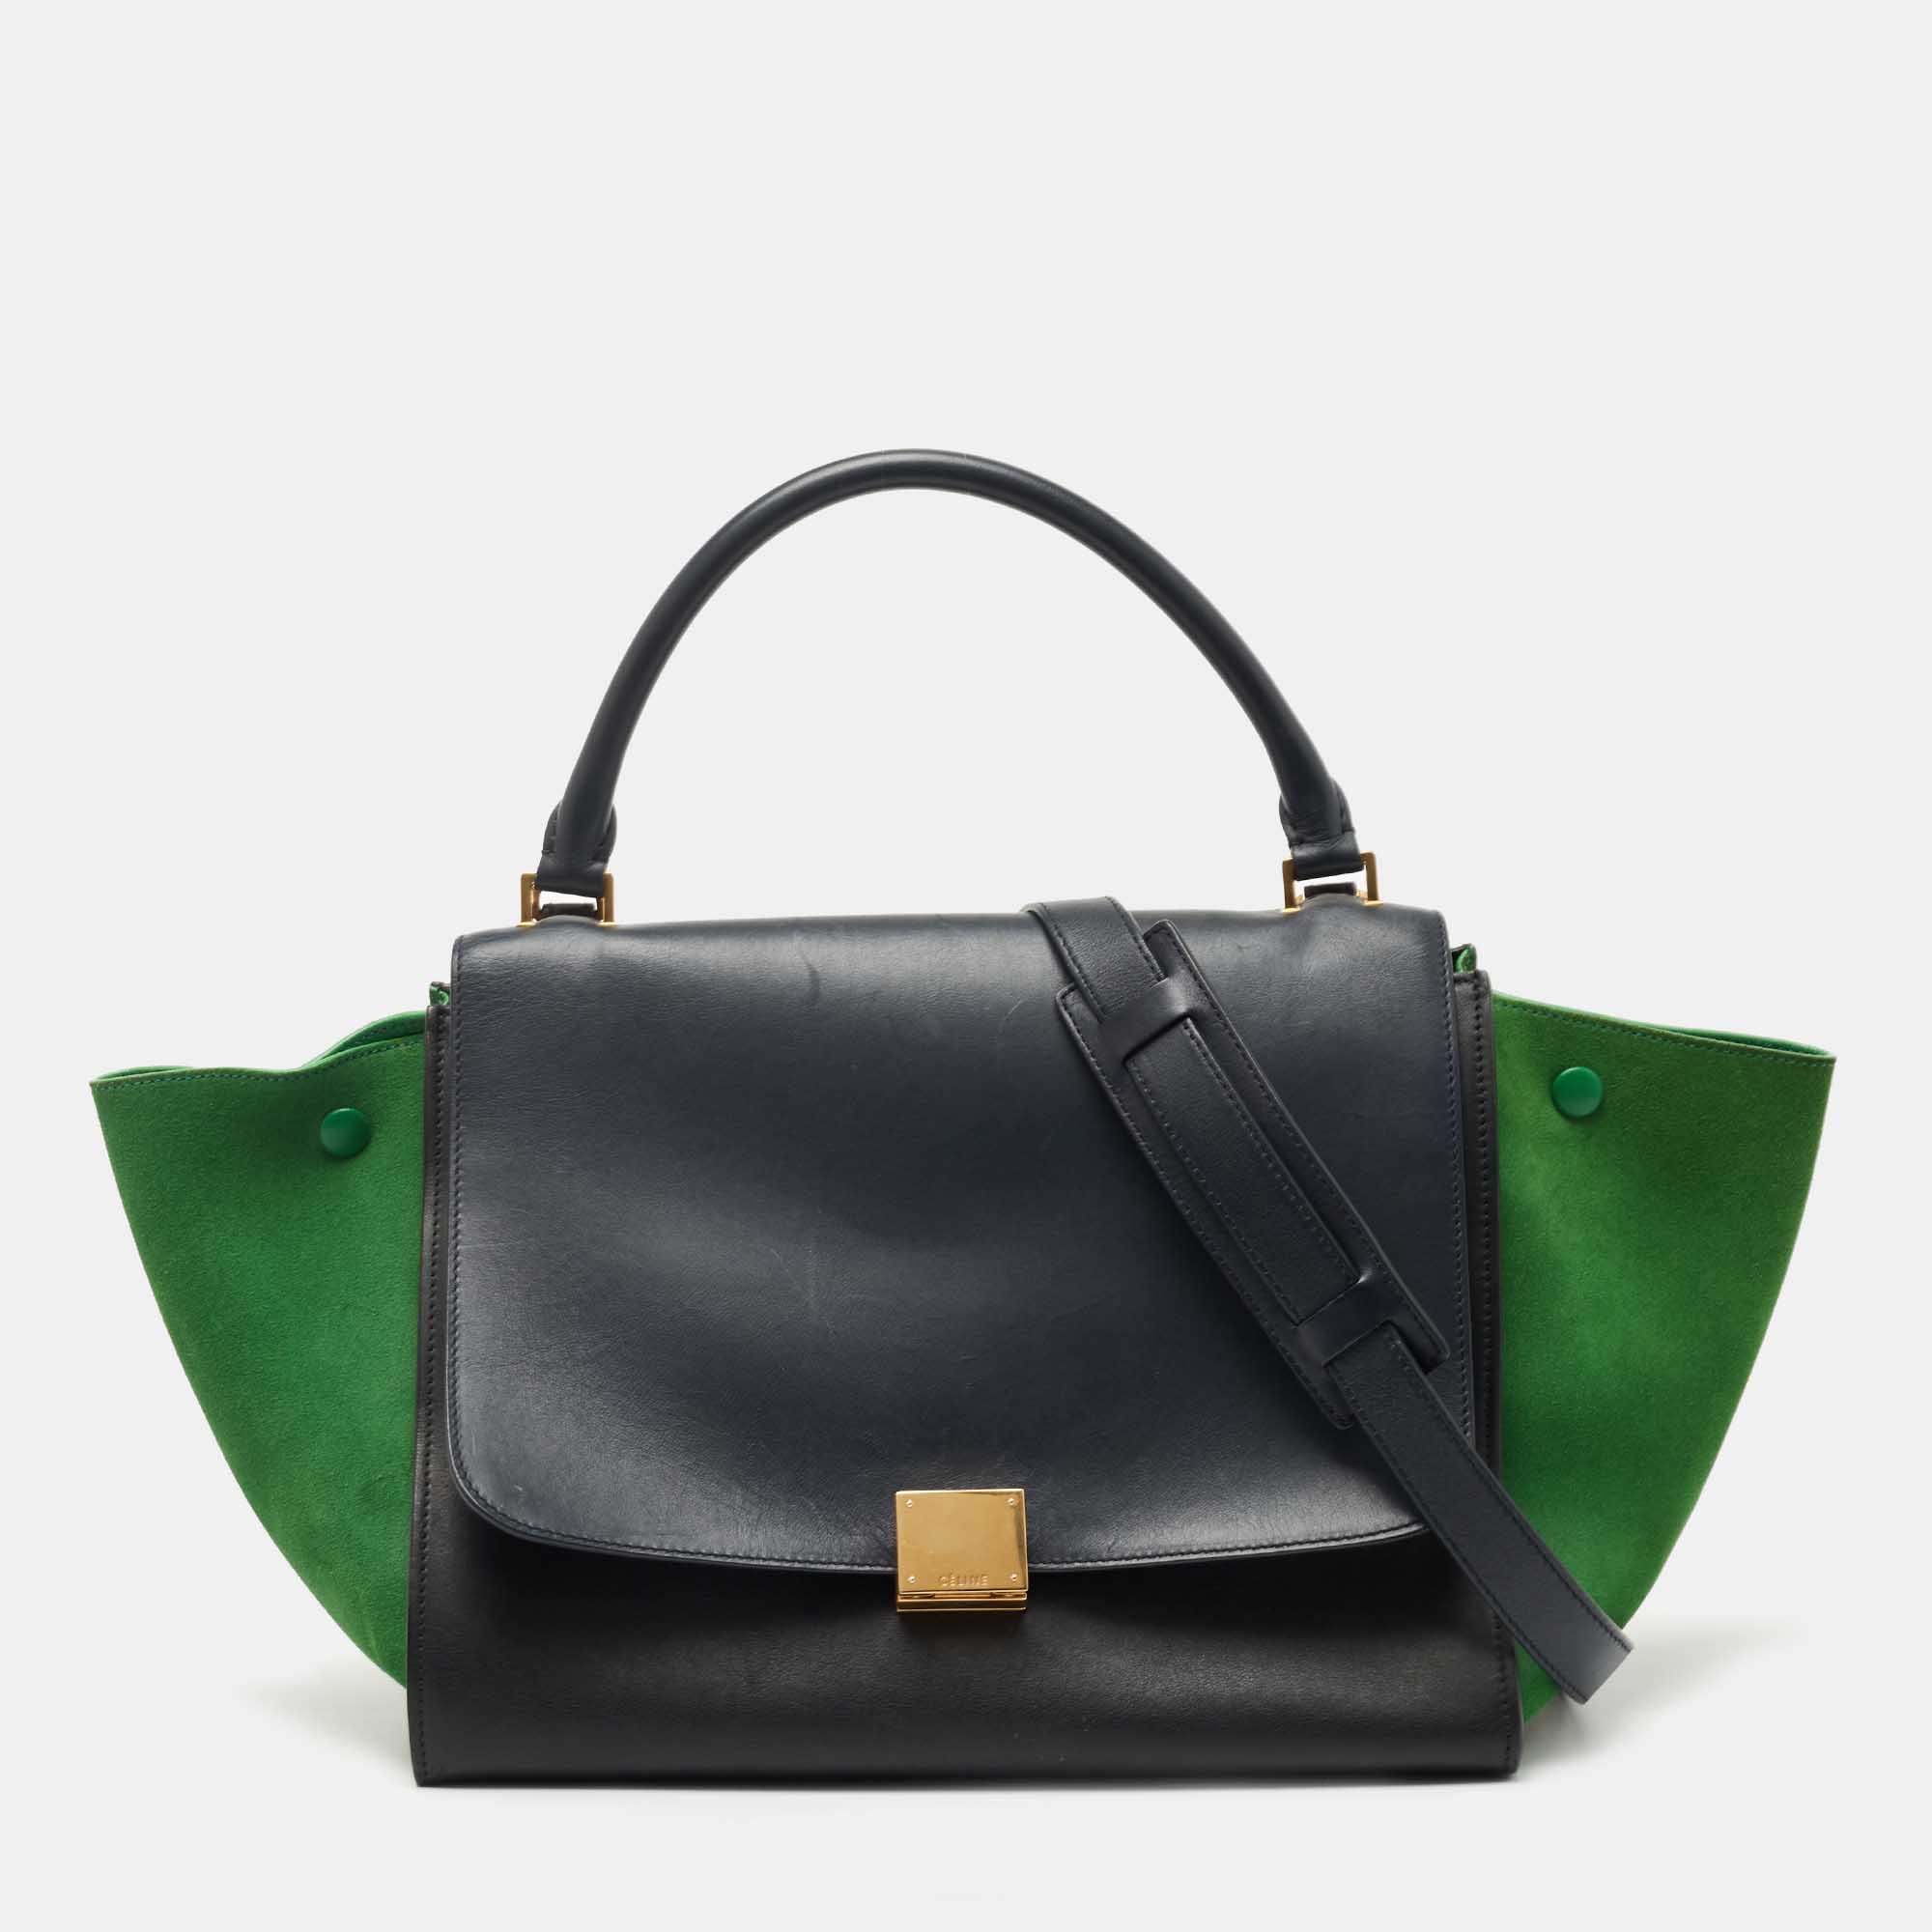 Celine Tricolor Leather And Suede Medium Trapeze Top Handle Bag